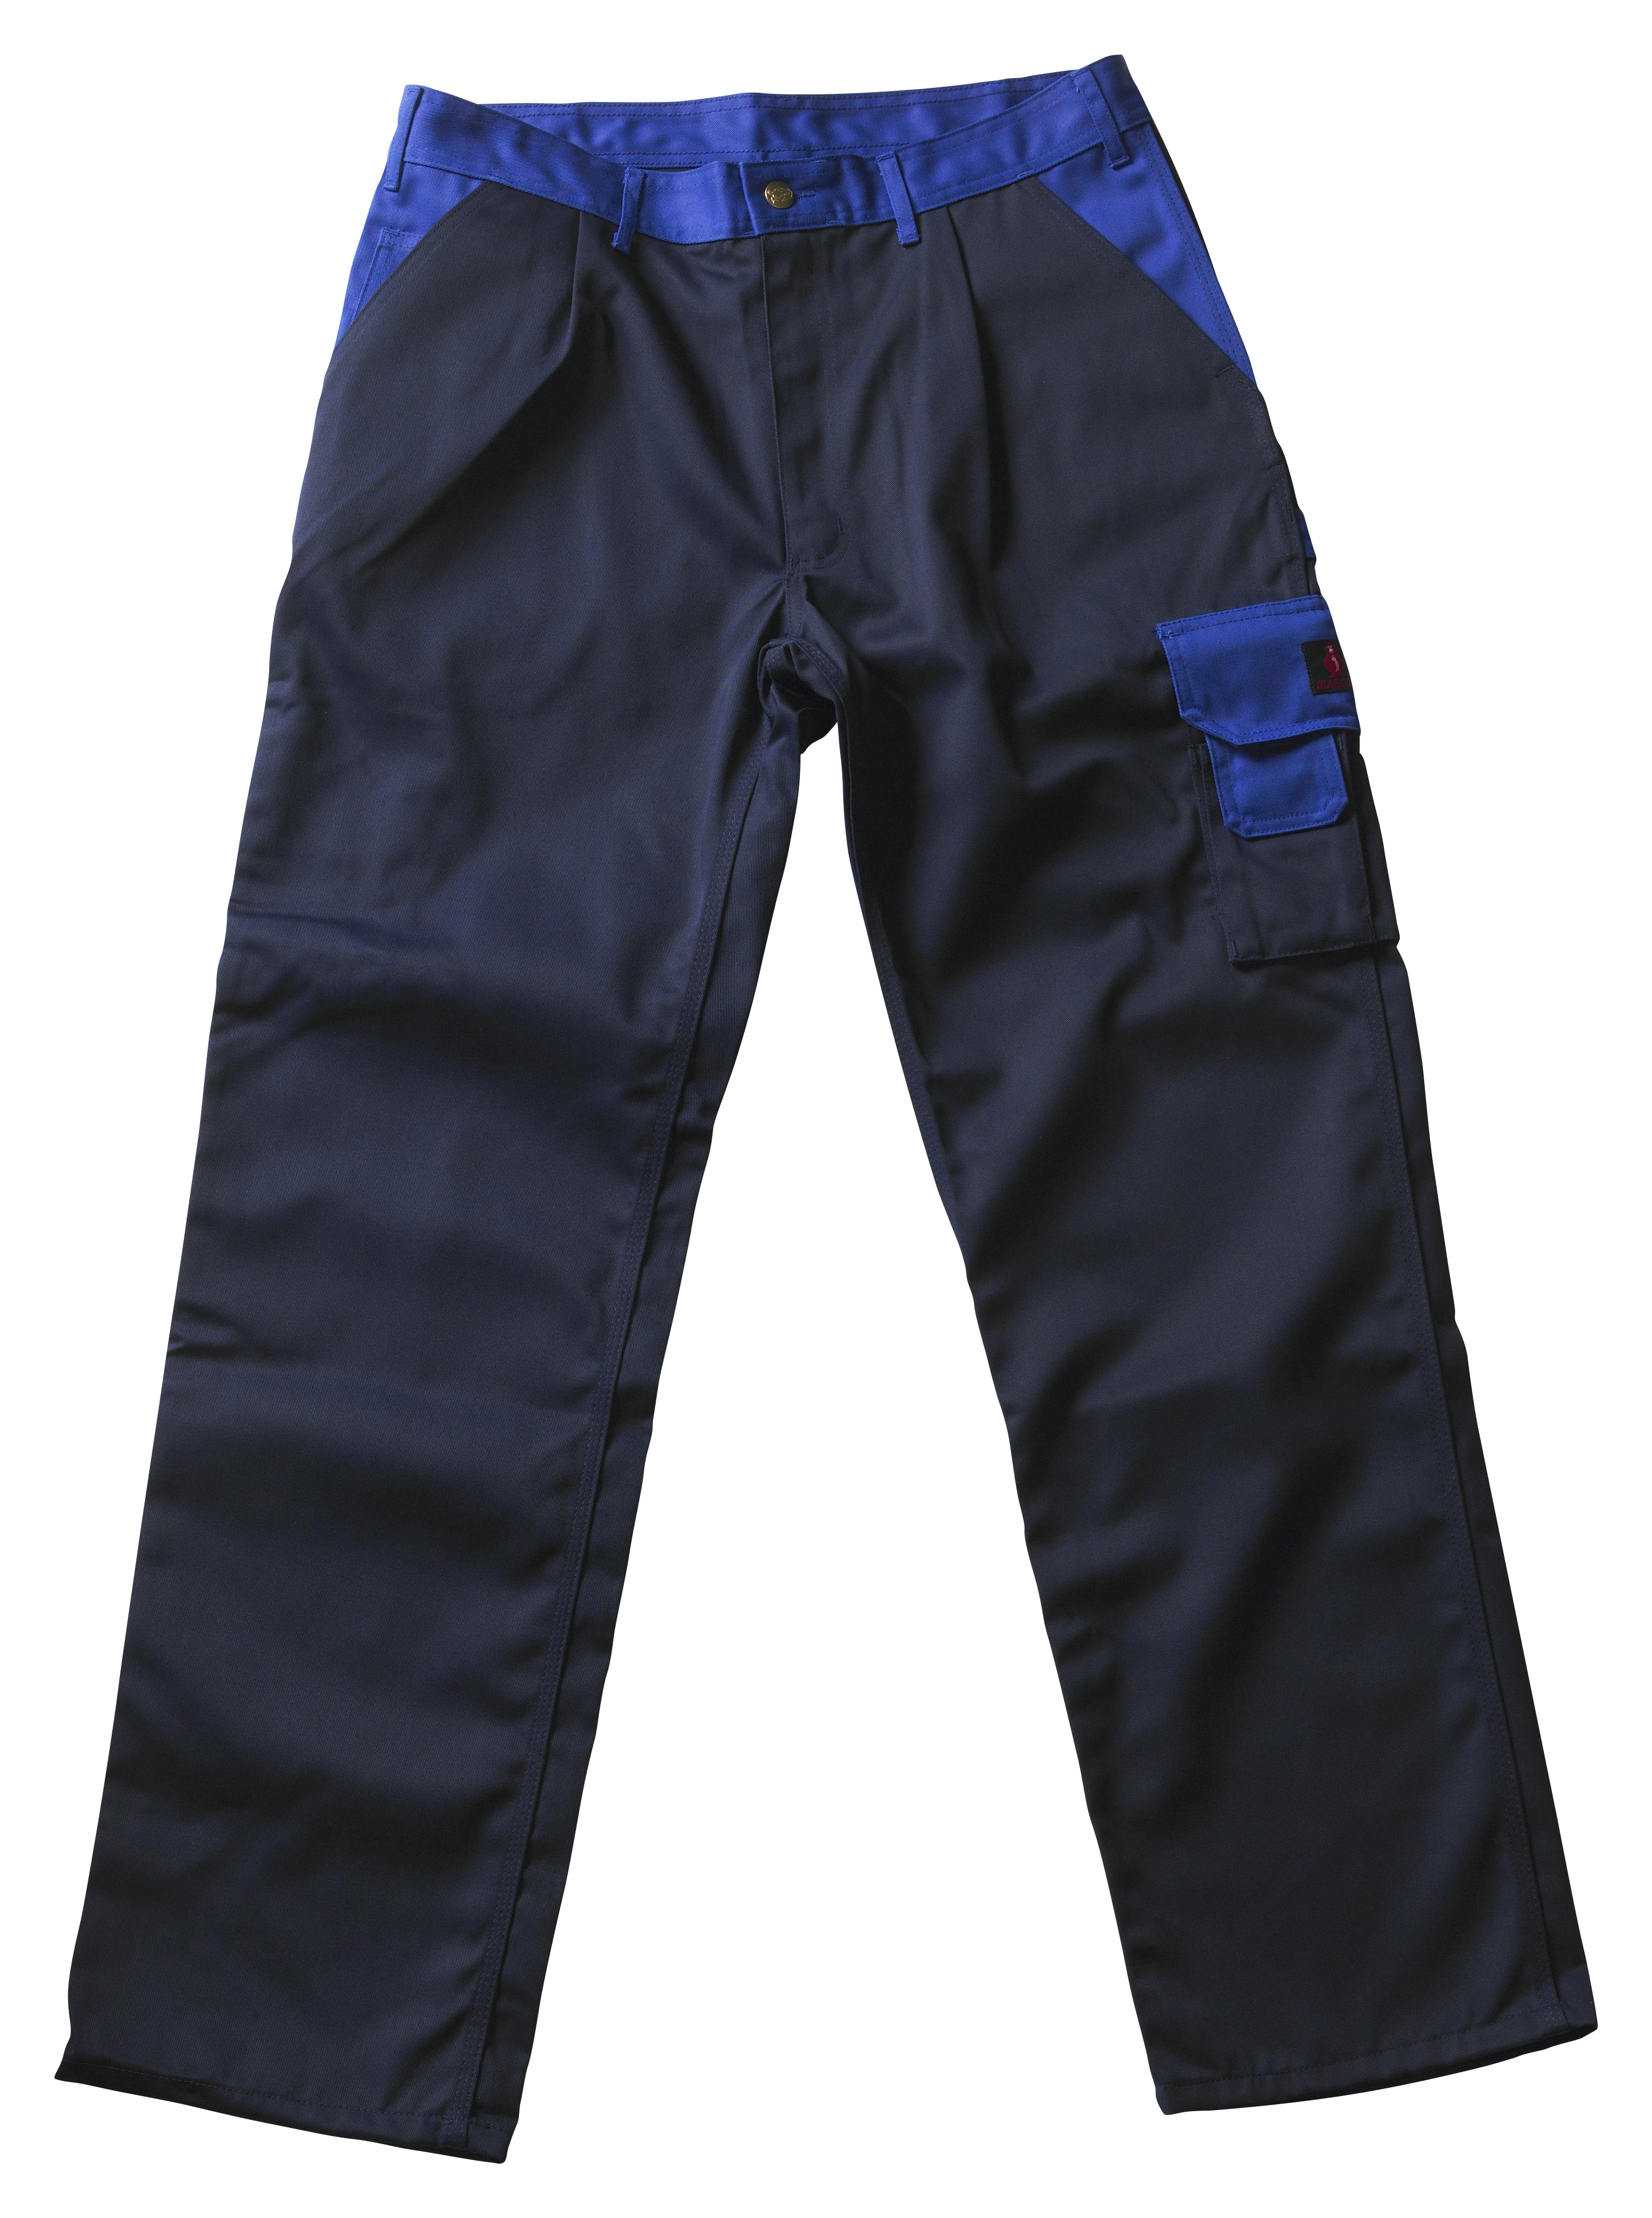 MASCOT Bundhose Arbeitshose Berufshose Workerhose Arbeitskleidung Berufskleidung Salerno IMAGE zweifarbig marine kornblau 310 g